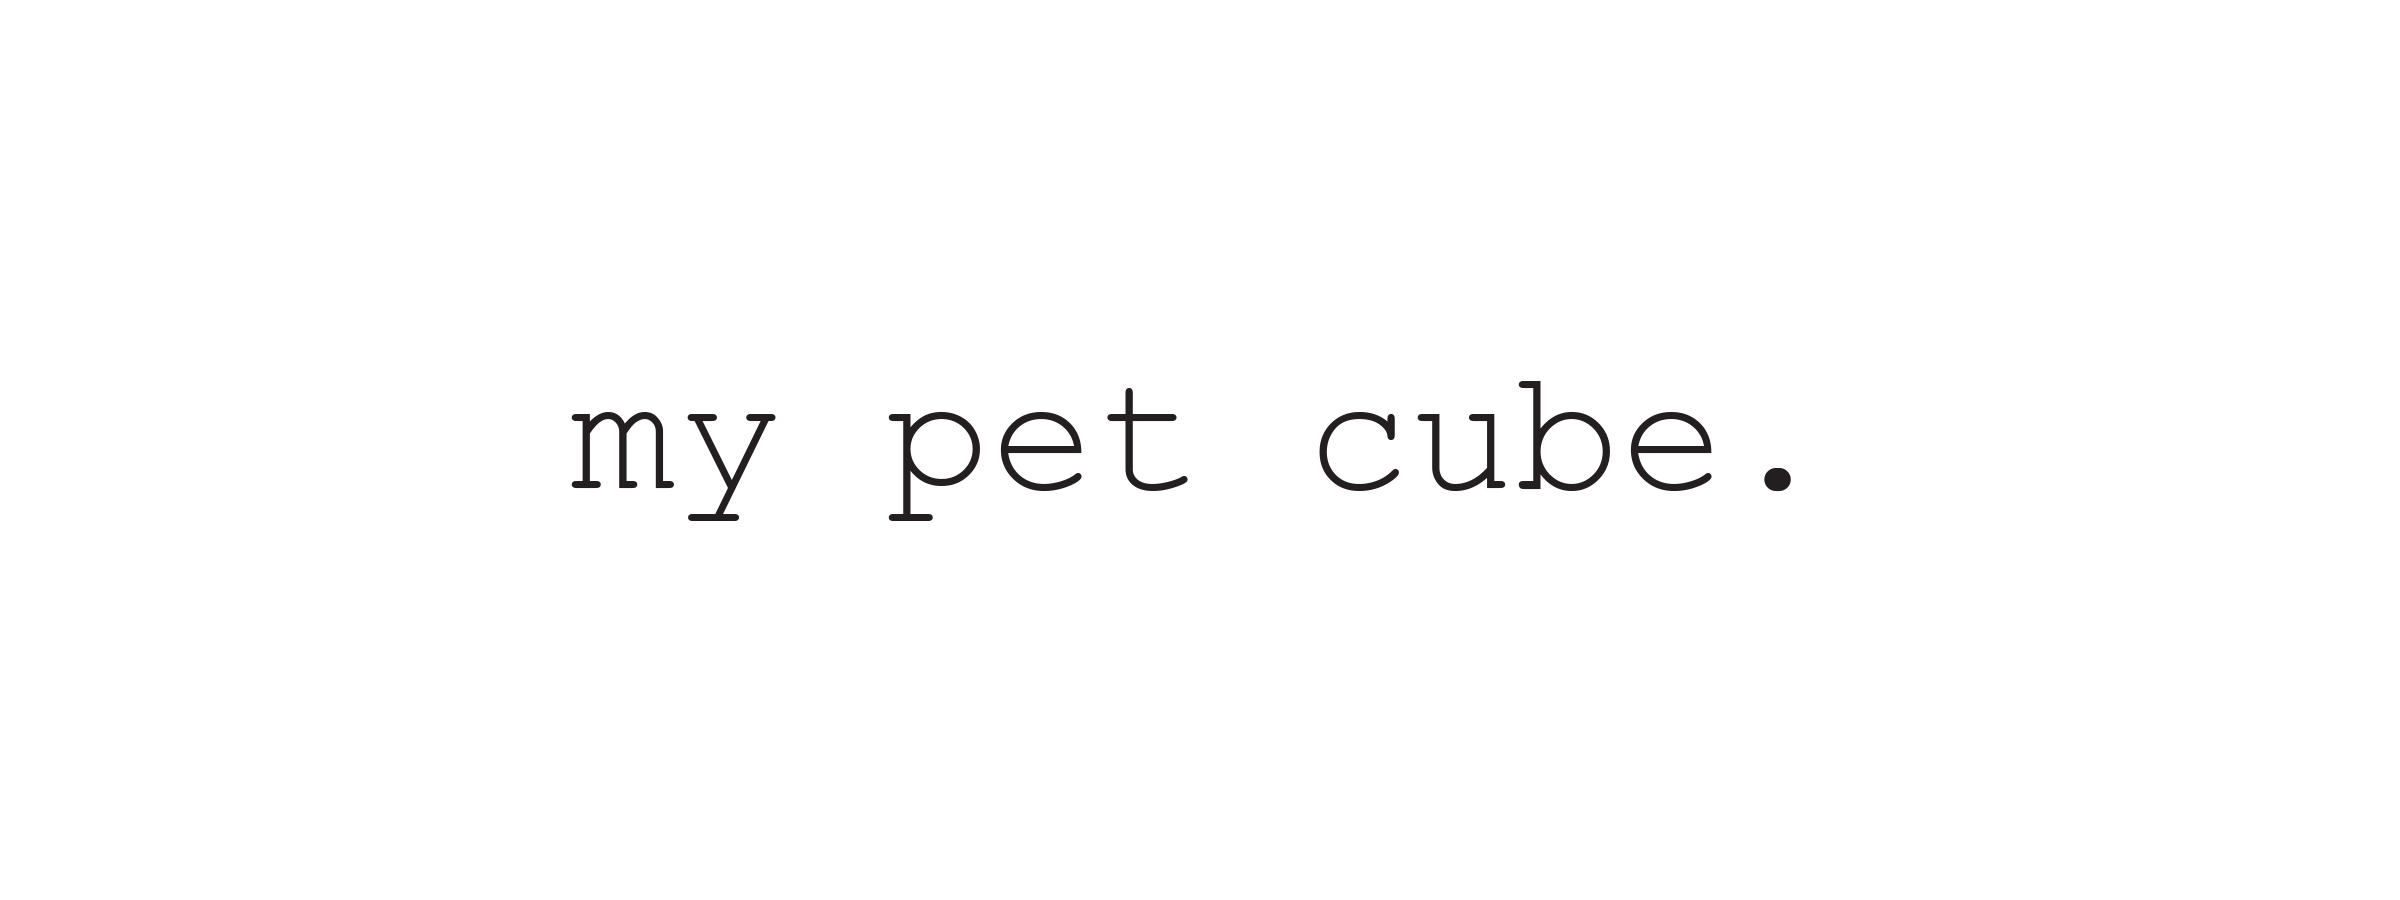 my pet cube.